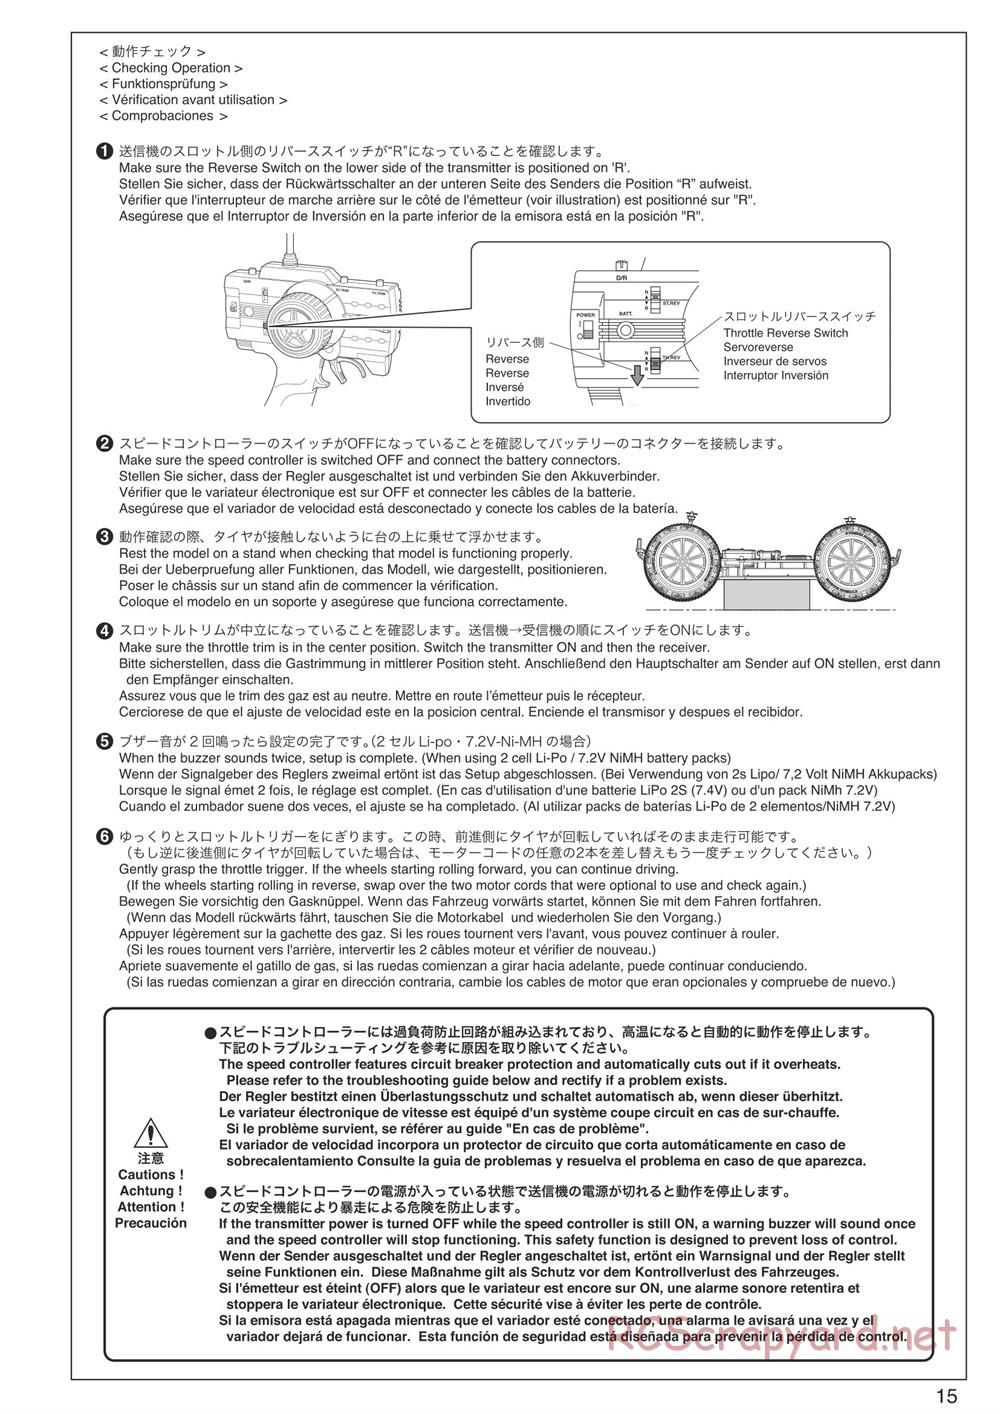 Kyosho - DMT-VE - Manual - Page 15